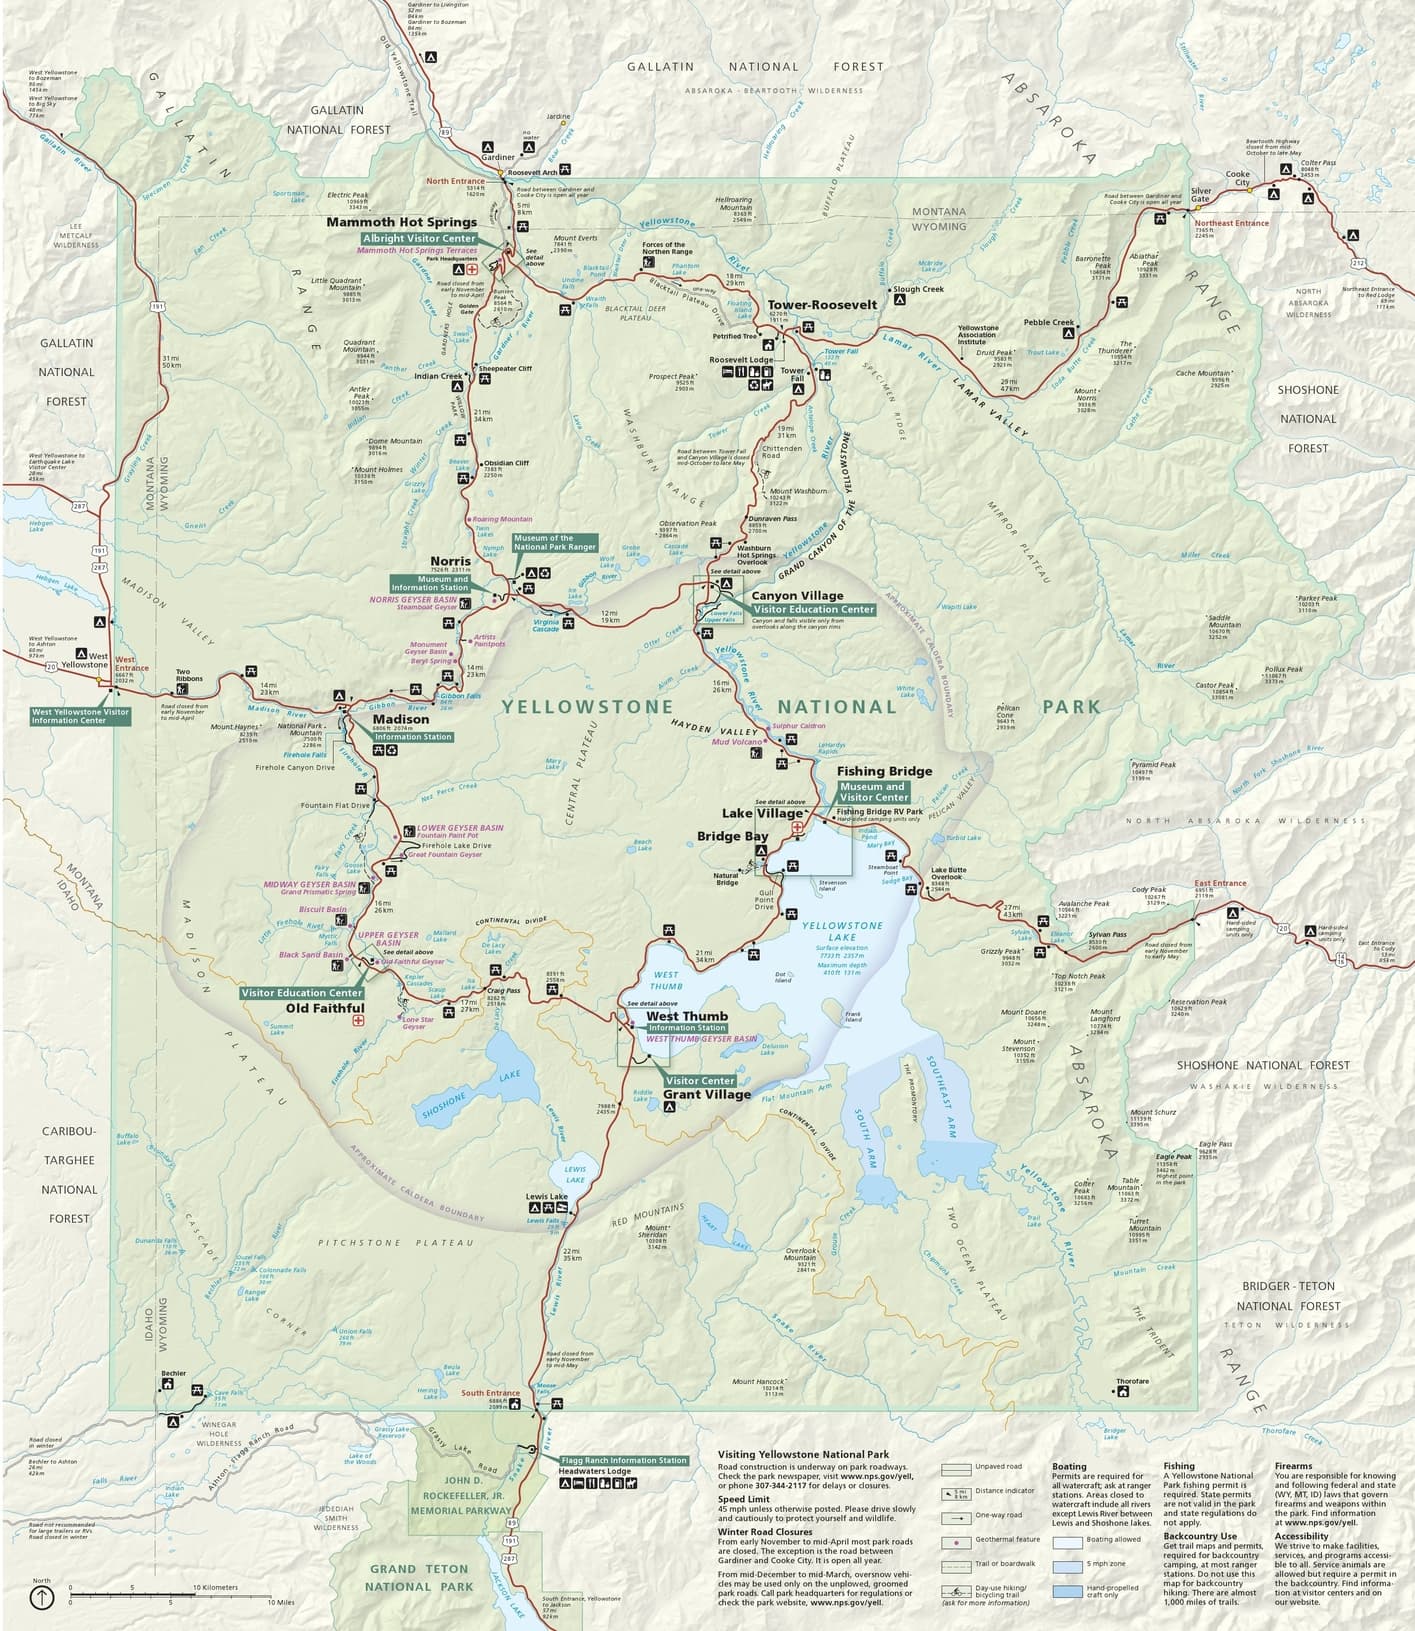 plan visit to yellowstone national park